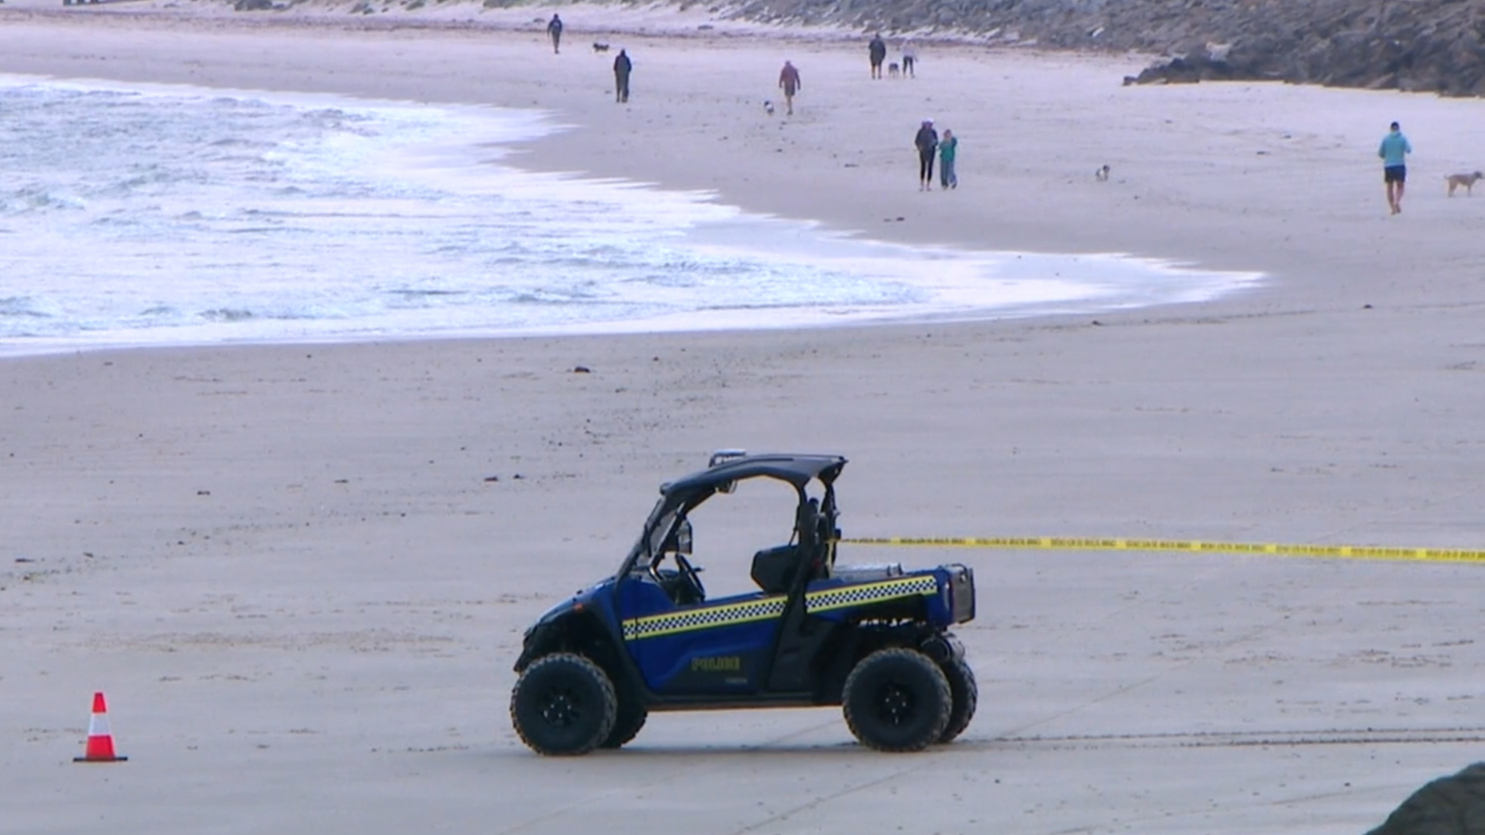 Police investigating death at a popular SA beach